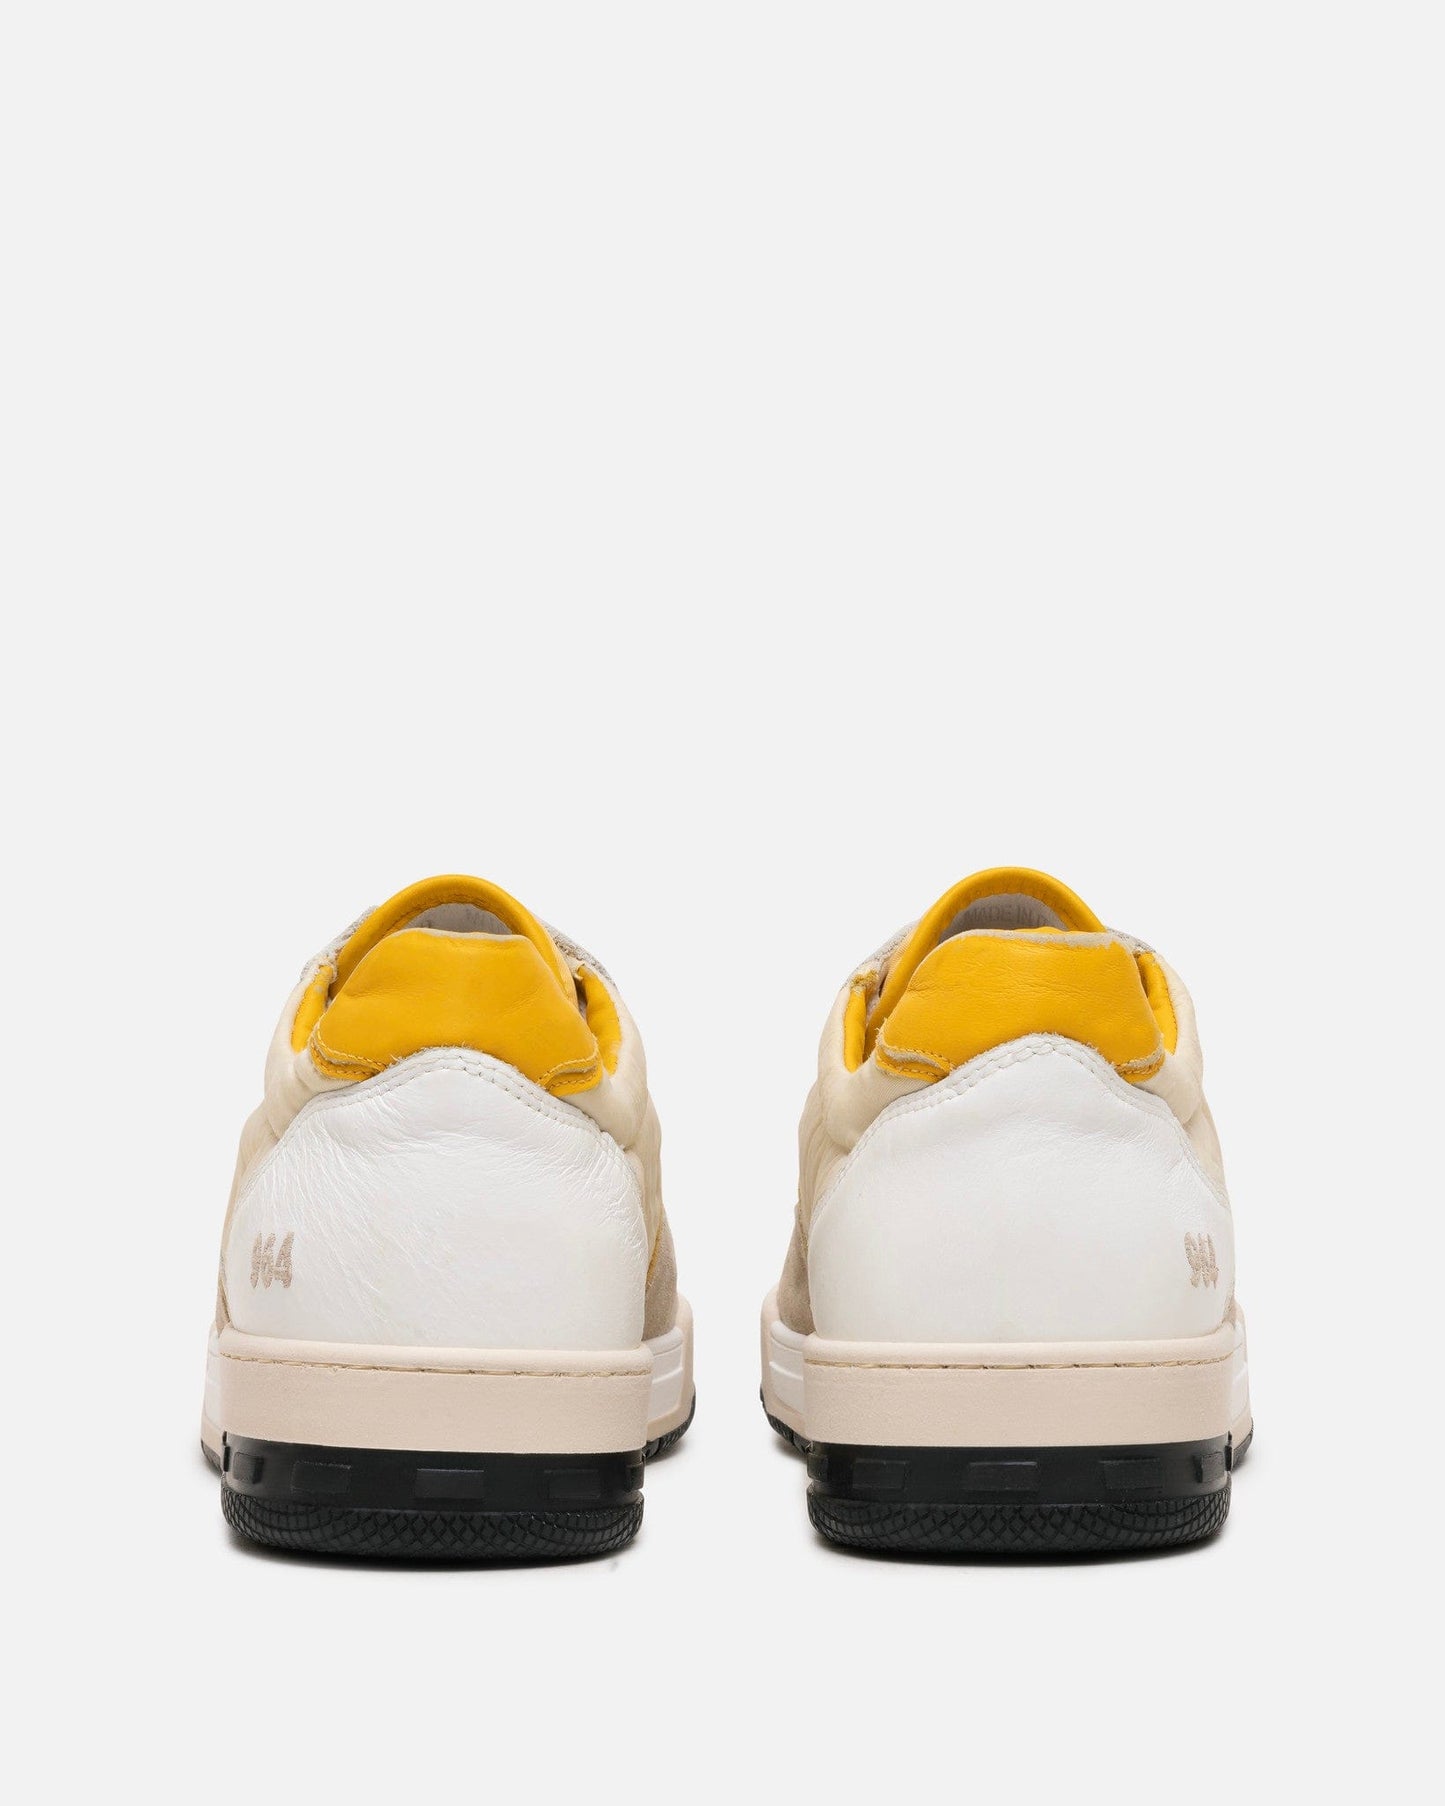 Rhude Men's Sneakers Rhude Racing Sneaker in White/Mustard